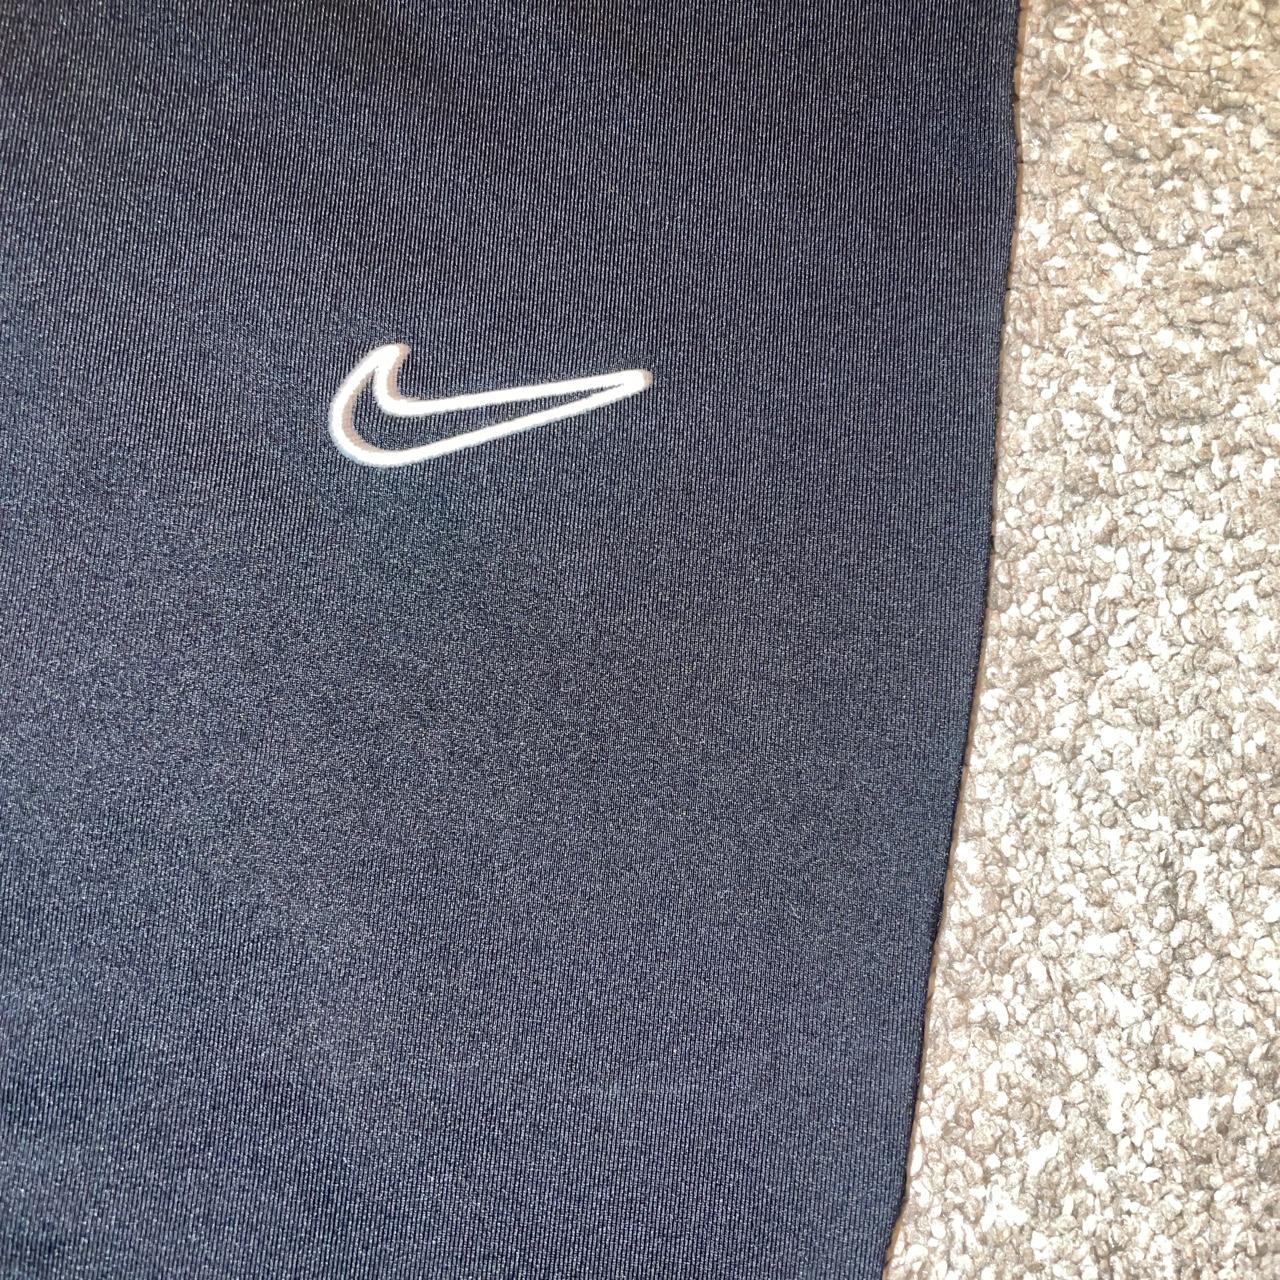 Nike dri-fit small flare leggings💟 mid rise active - Depop